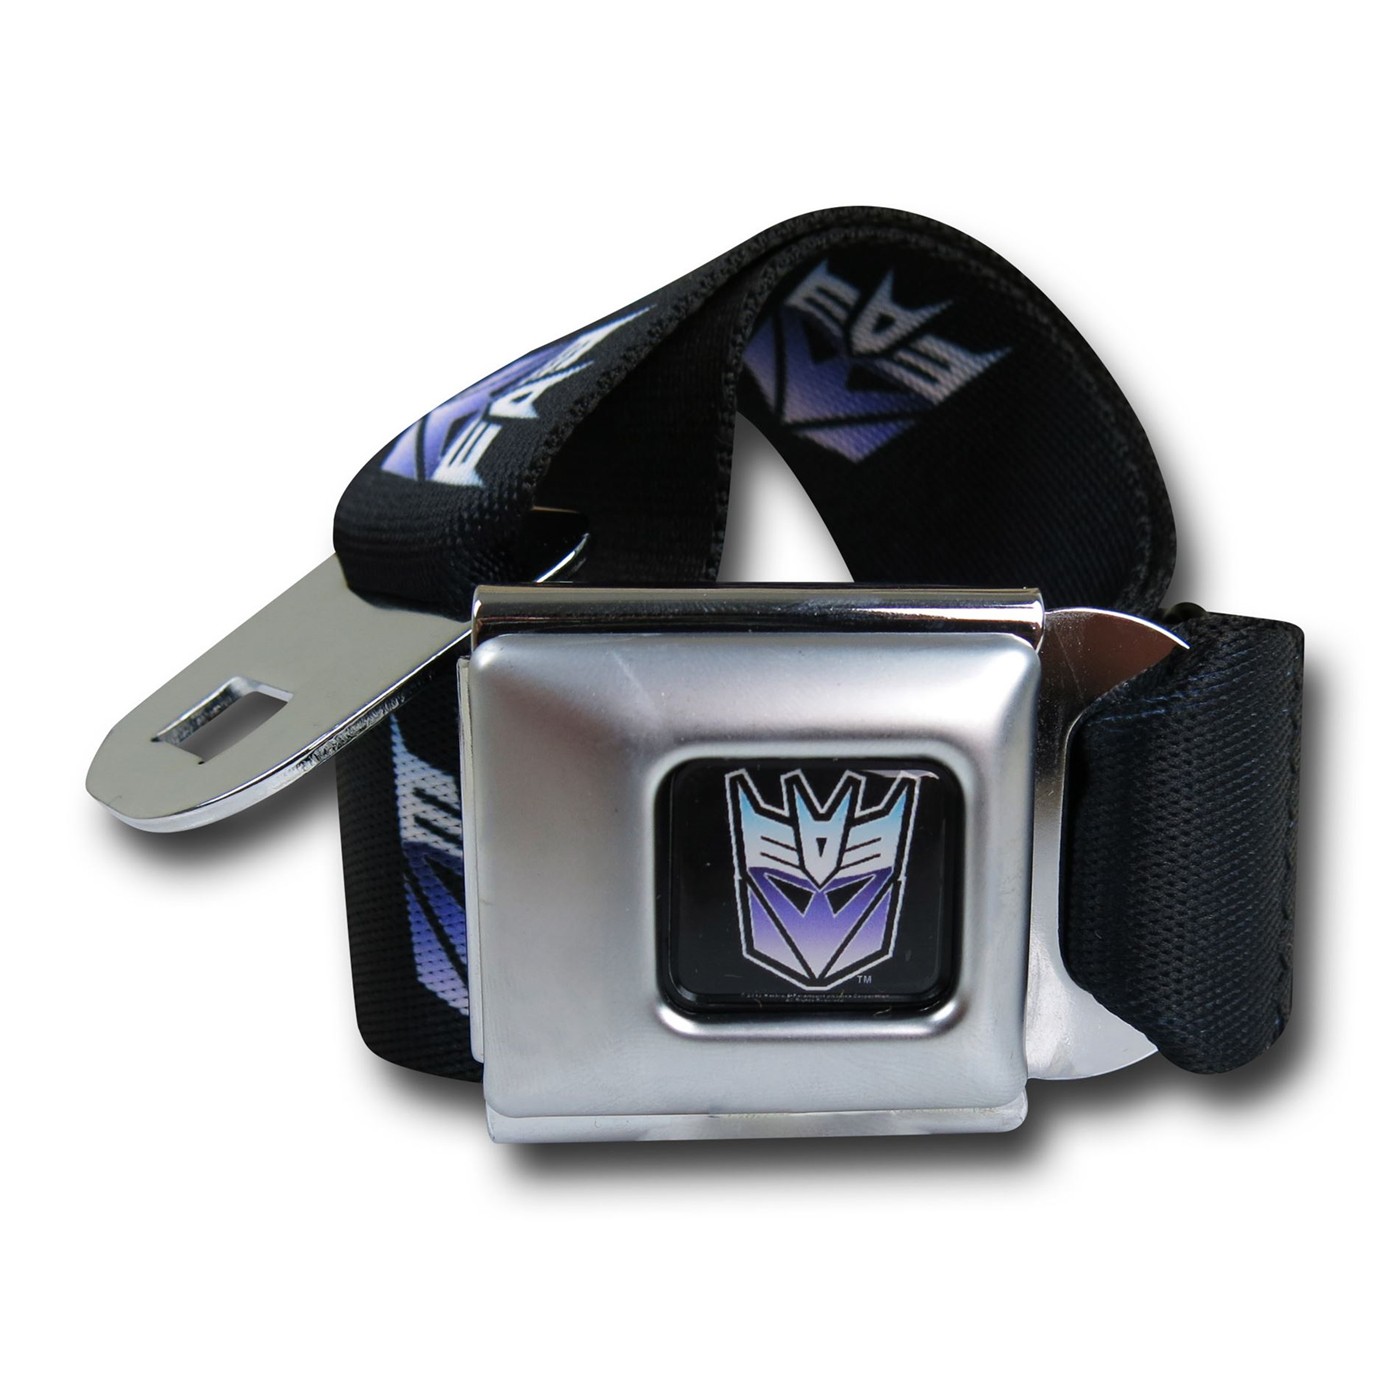 Transformers Decepticon Symbols Seatbelt Belt